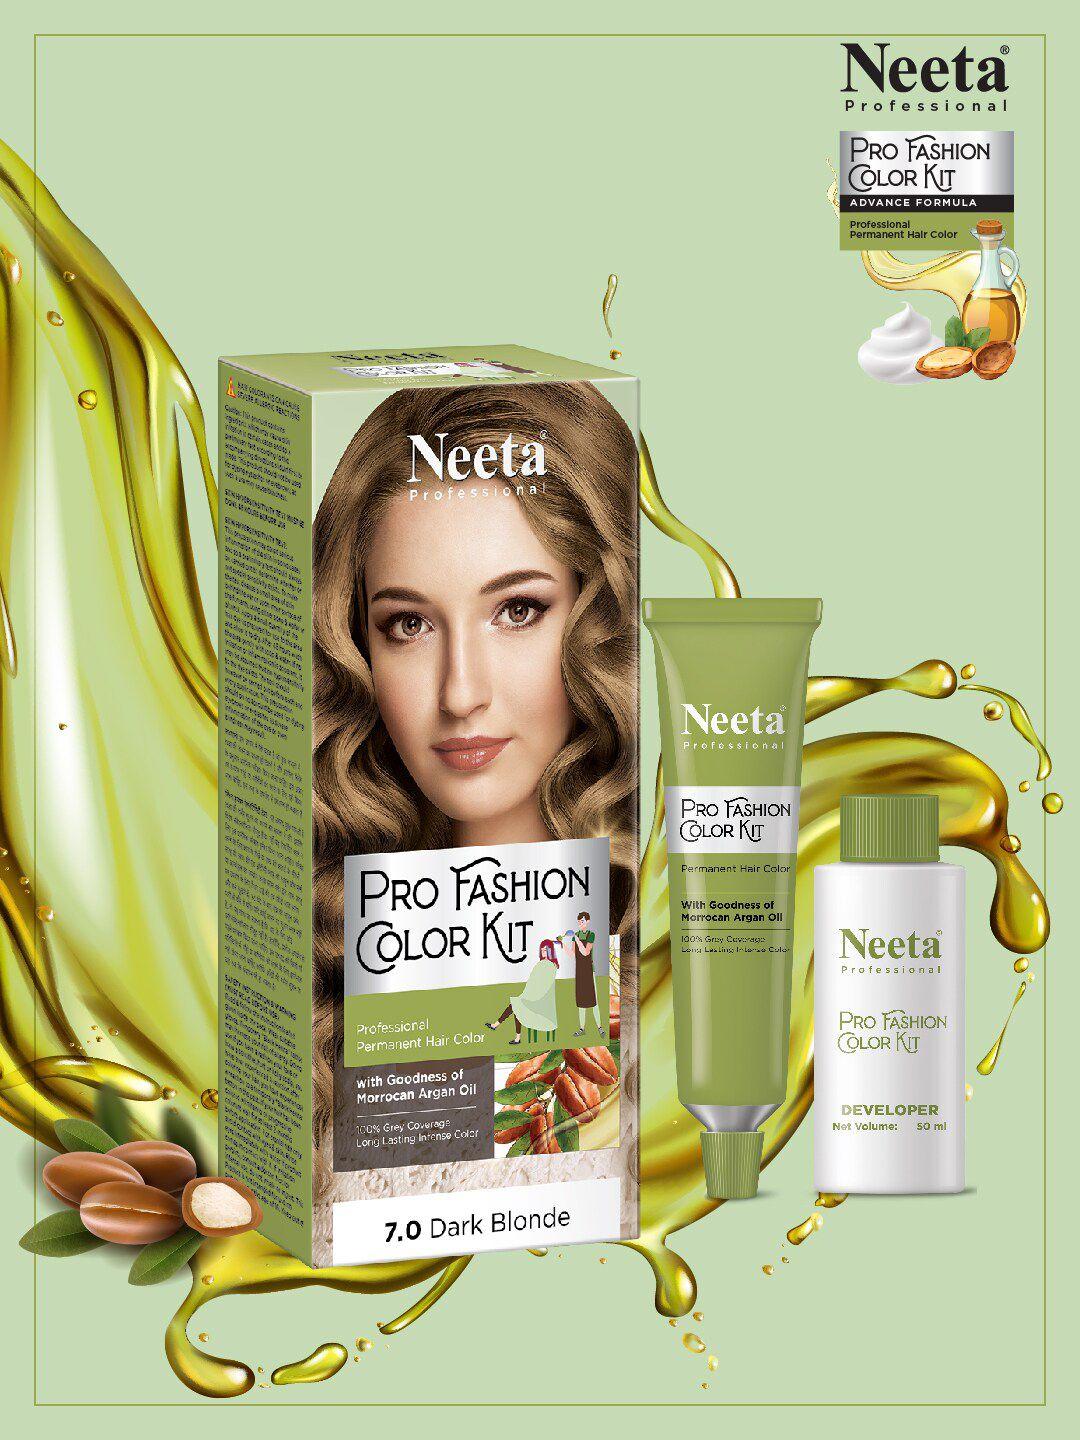 neeta professional pro fashion permanent hair color kit 100g - dark blonde 7.0